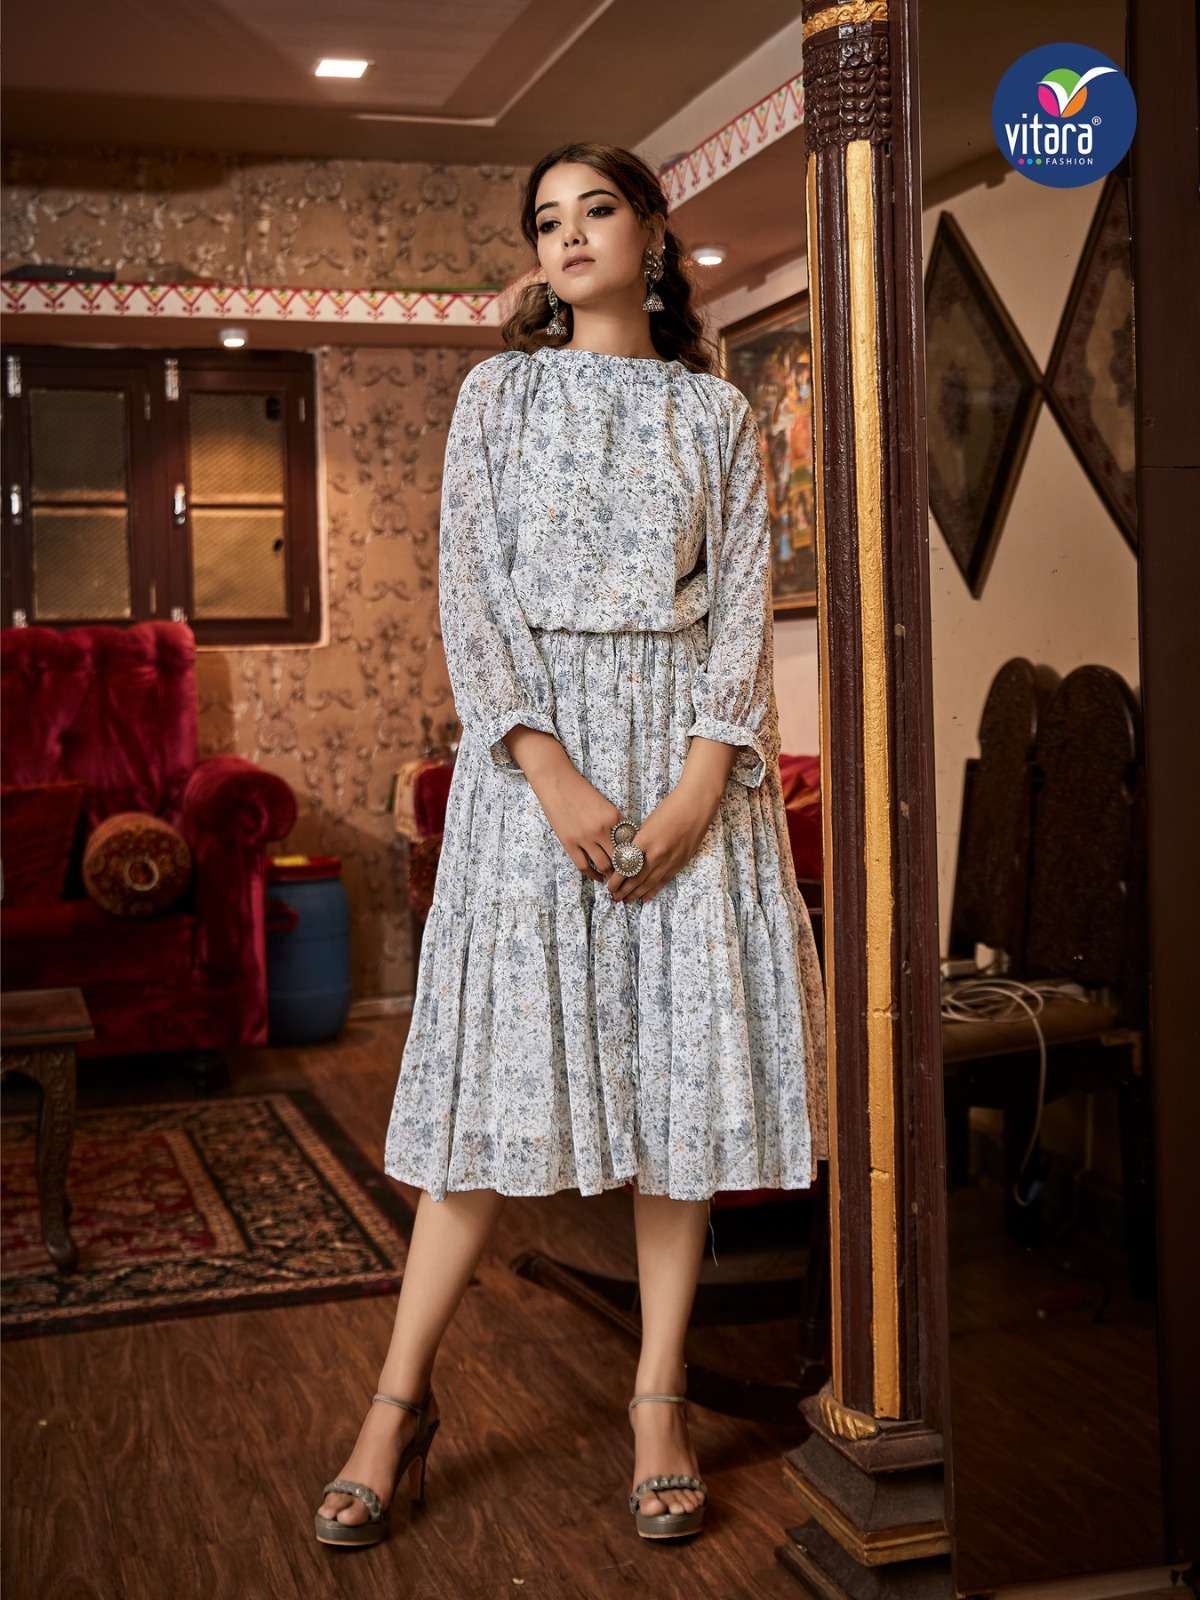 vitara fashion oregan 1001-1004 series exclusive designer tunic catalogue online price surat